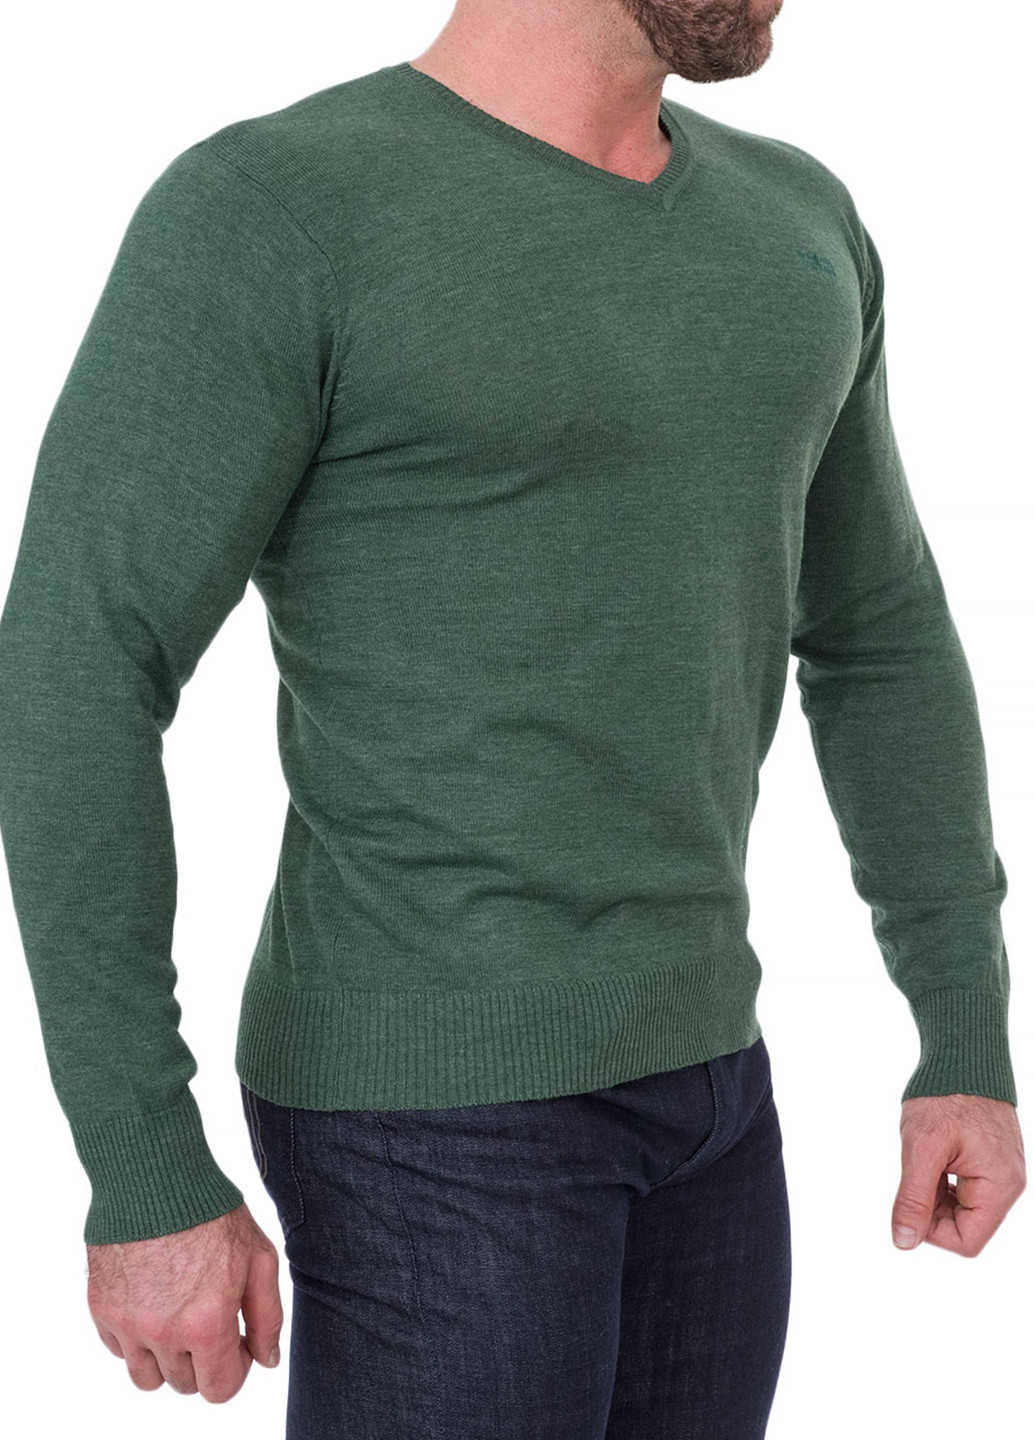 Зеленый демисезонный пуловер пуловер E-Bound